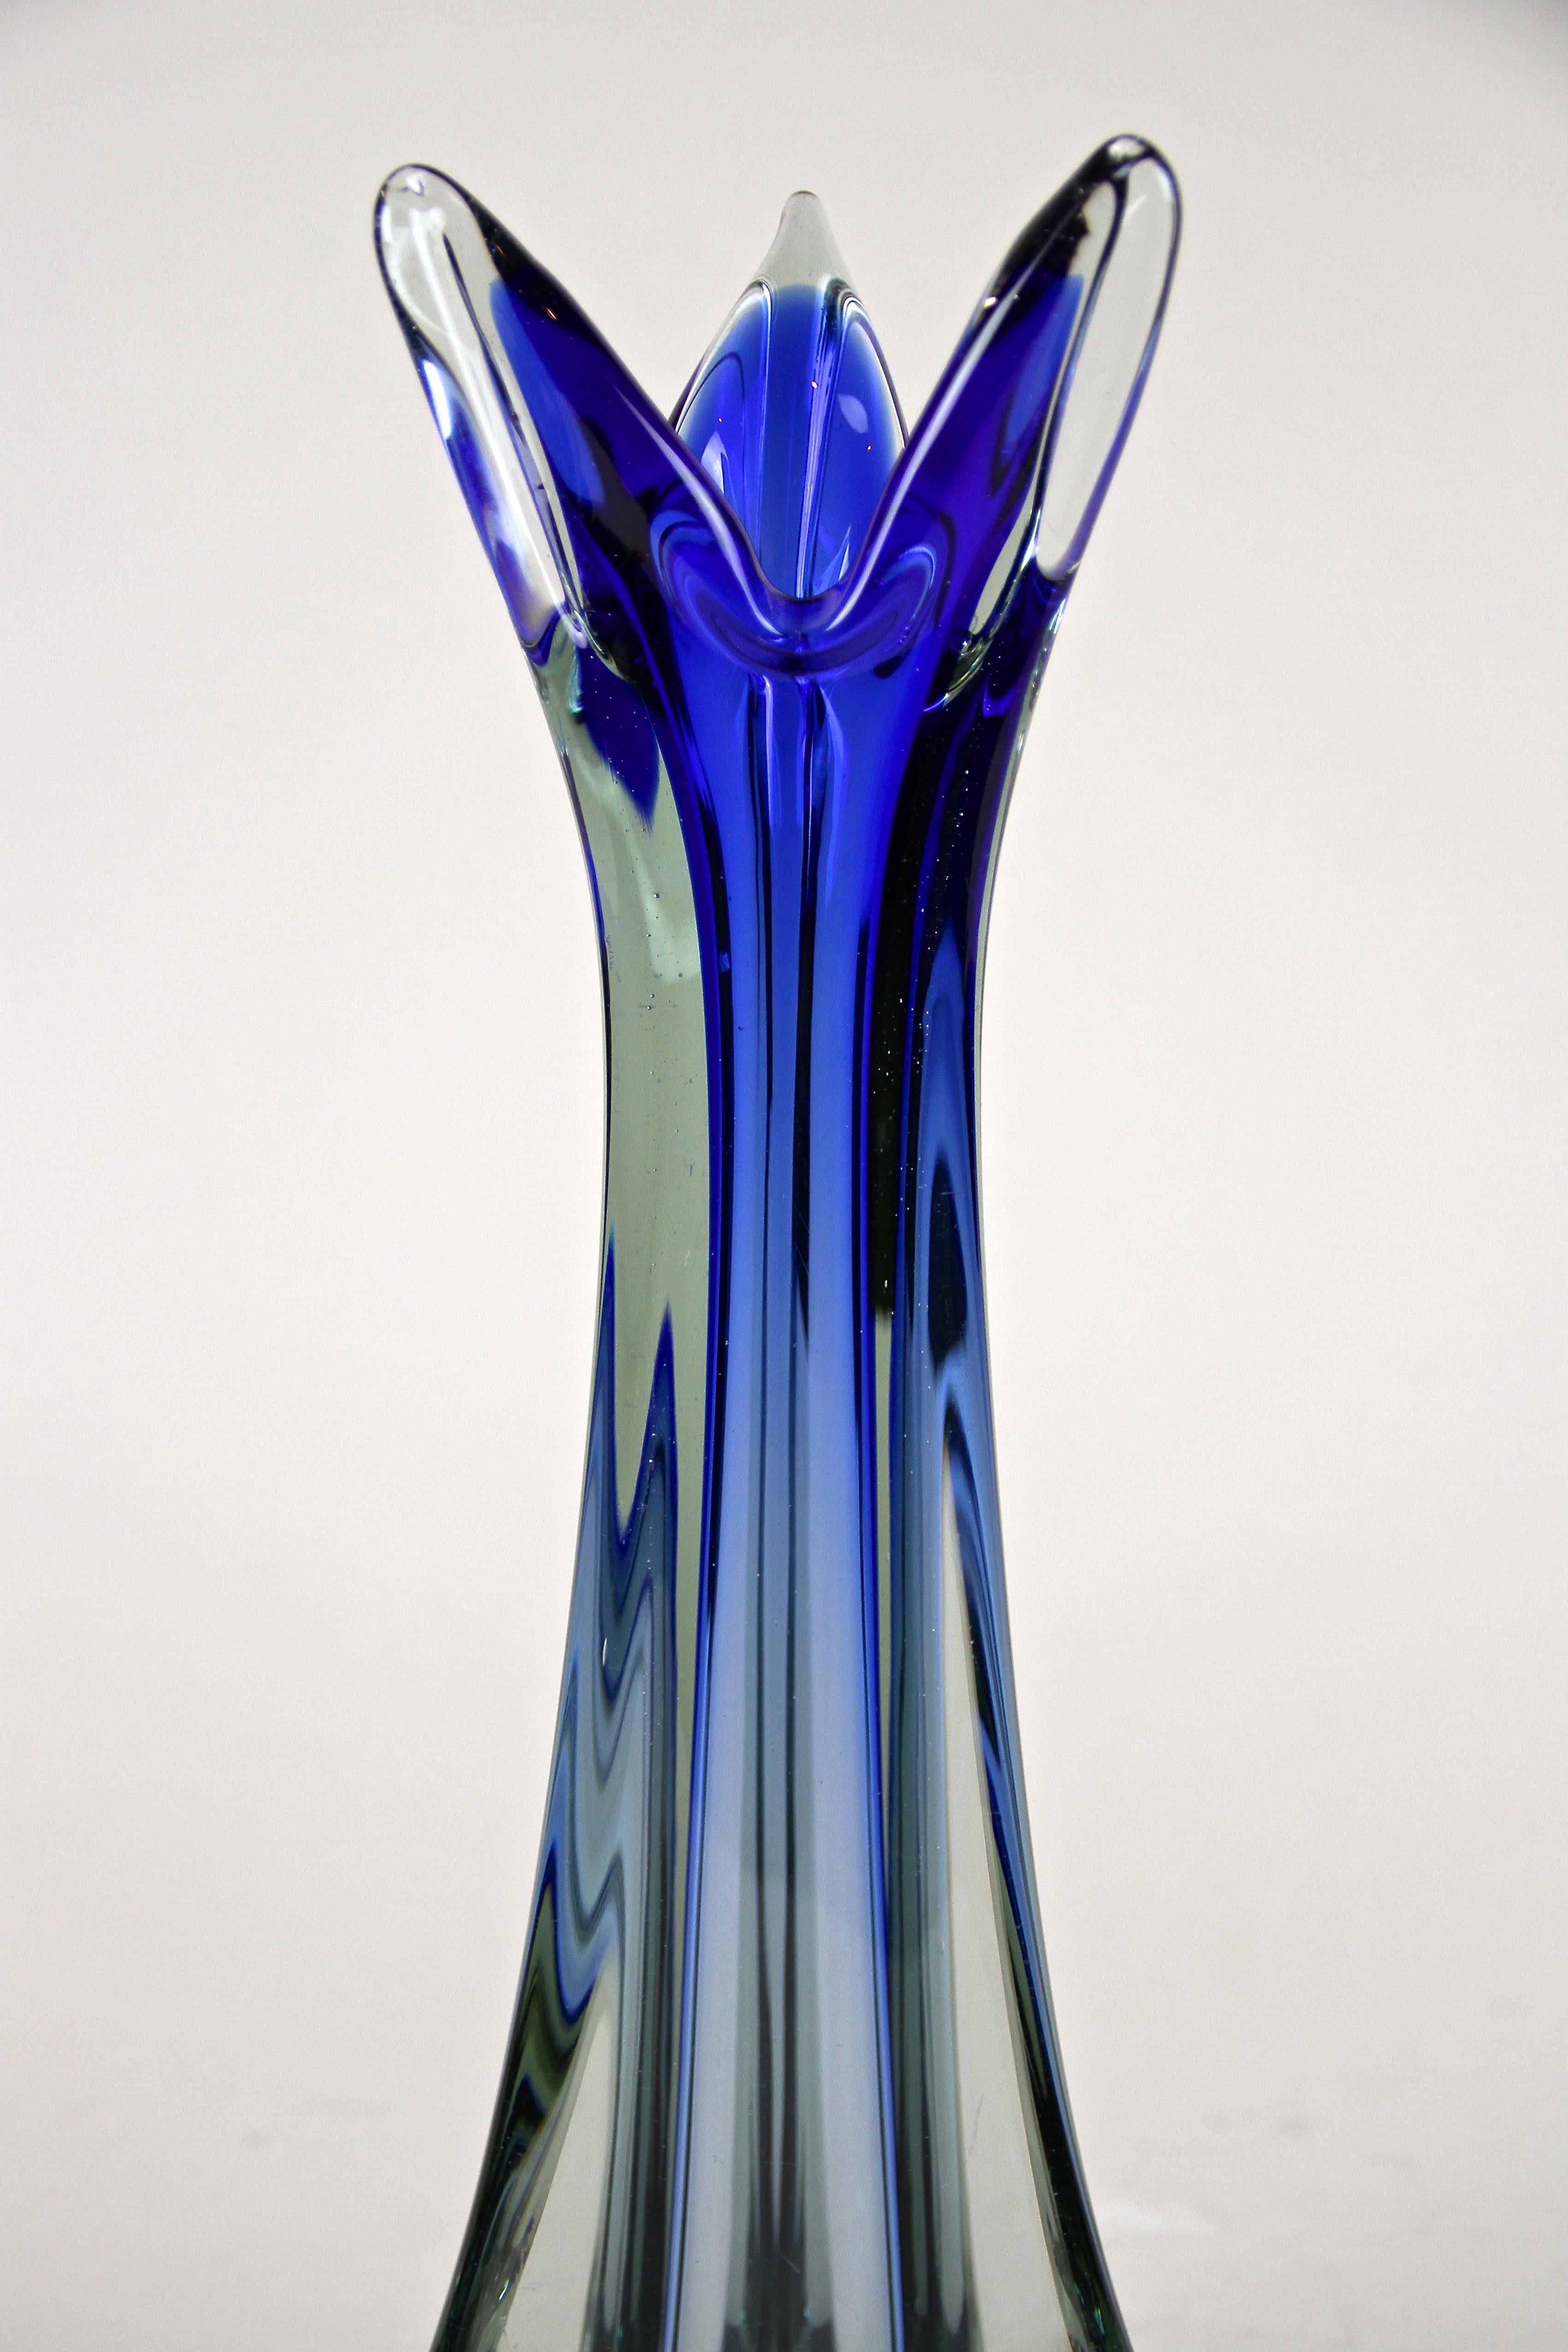 20th Century Murano Glass Vase in Grey / Blue Tones, Italy circa 1970 6